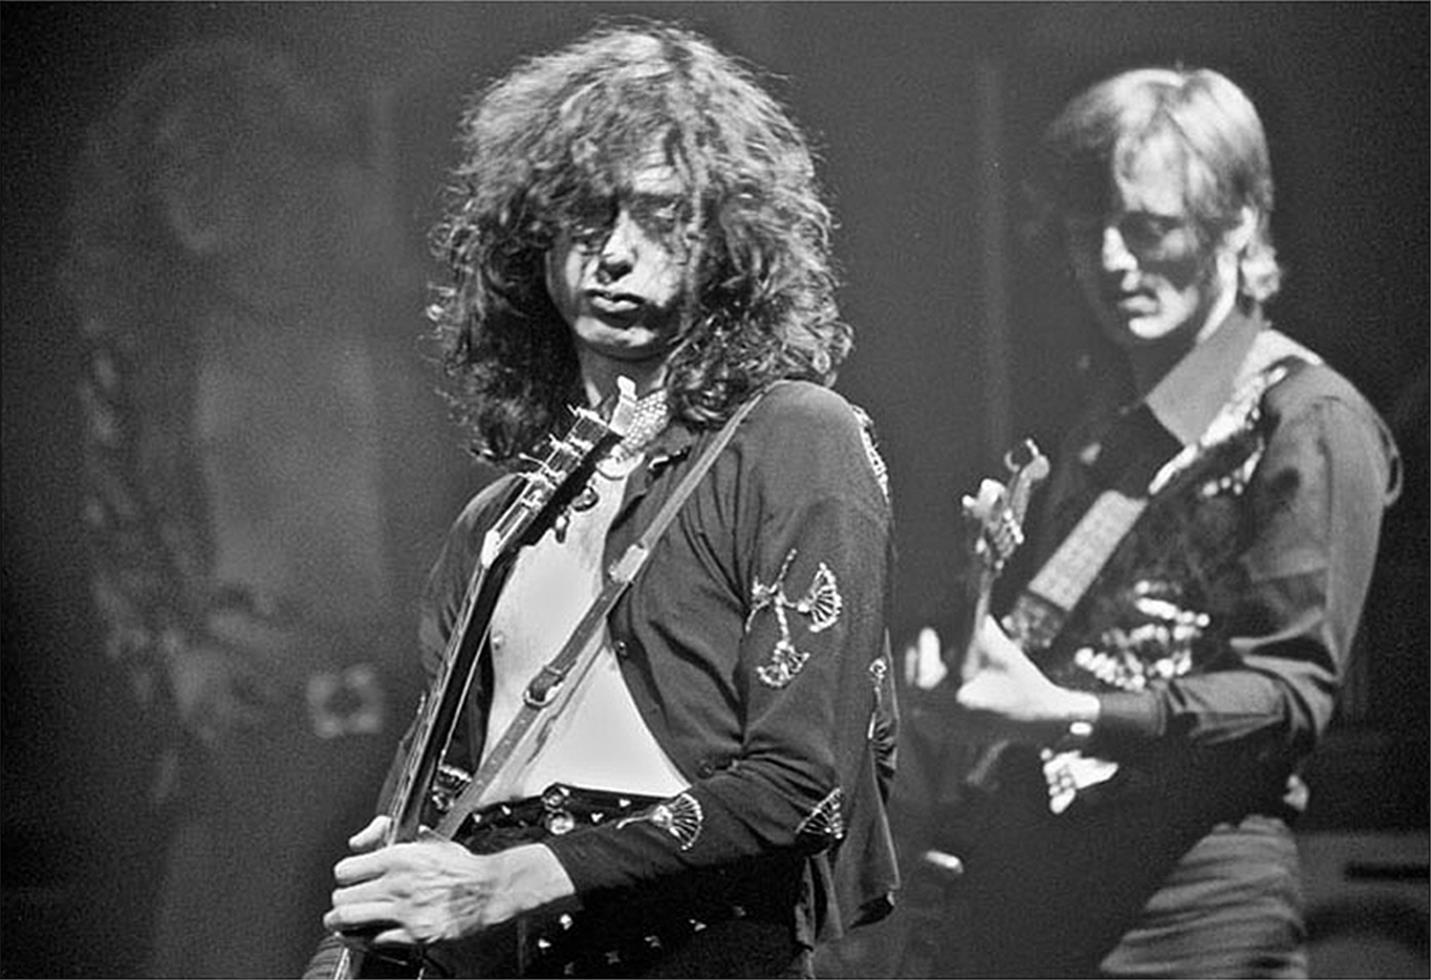 Michael Brennan Black and White Photograph - Jimmy Page, John Paul Jones, Led Zeppelin, Detroit, Triple image